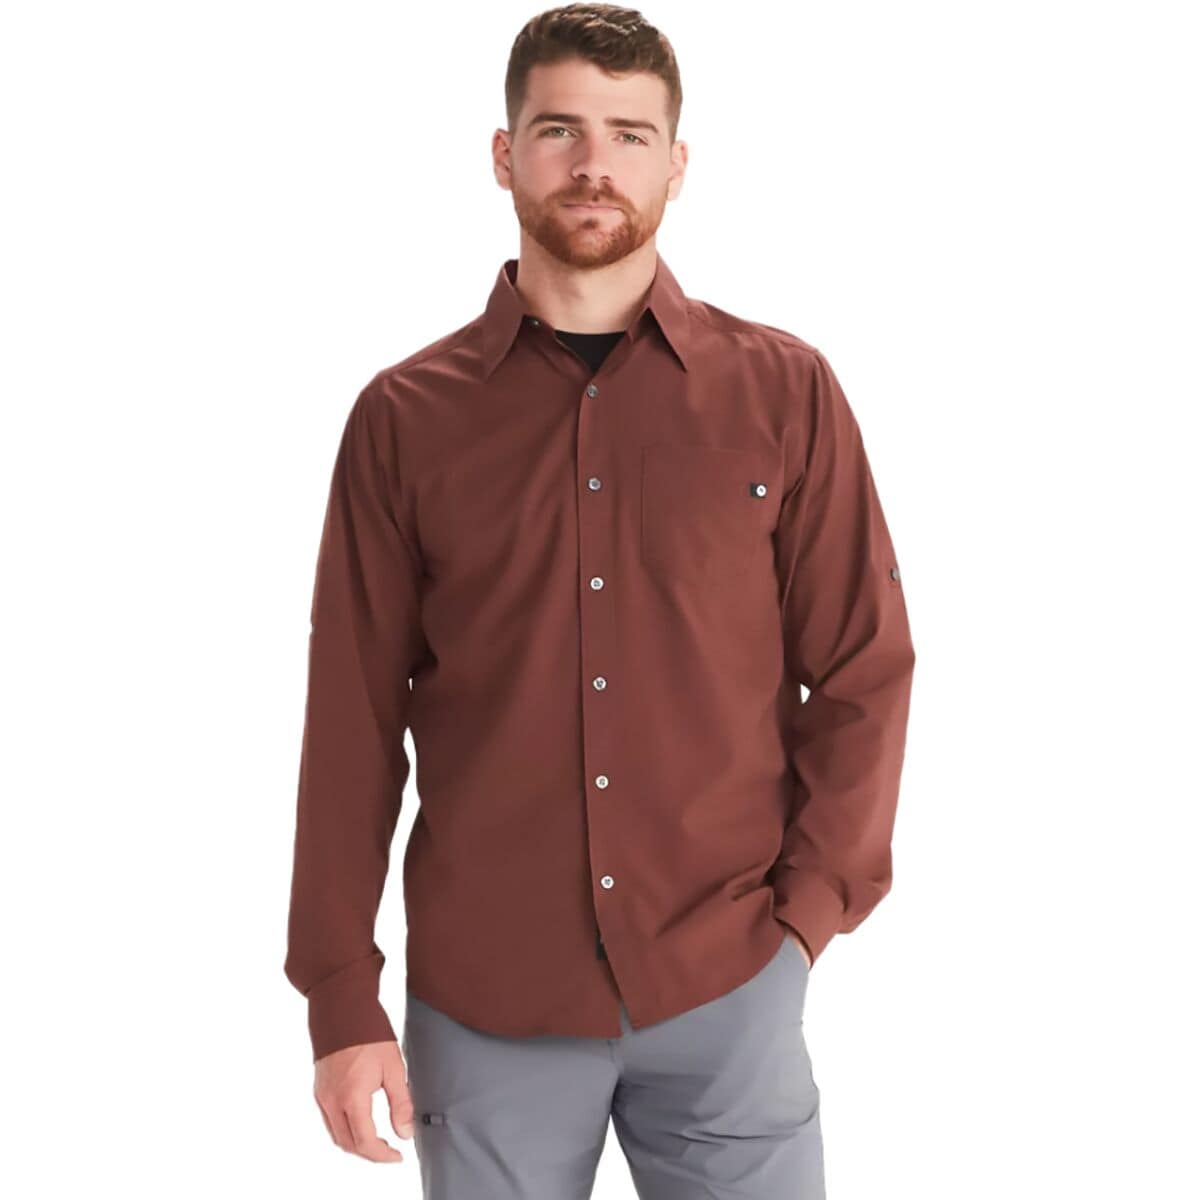 Aerobora Long-Sleeve Shirt - Men